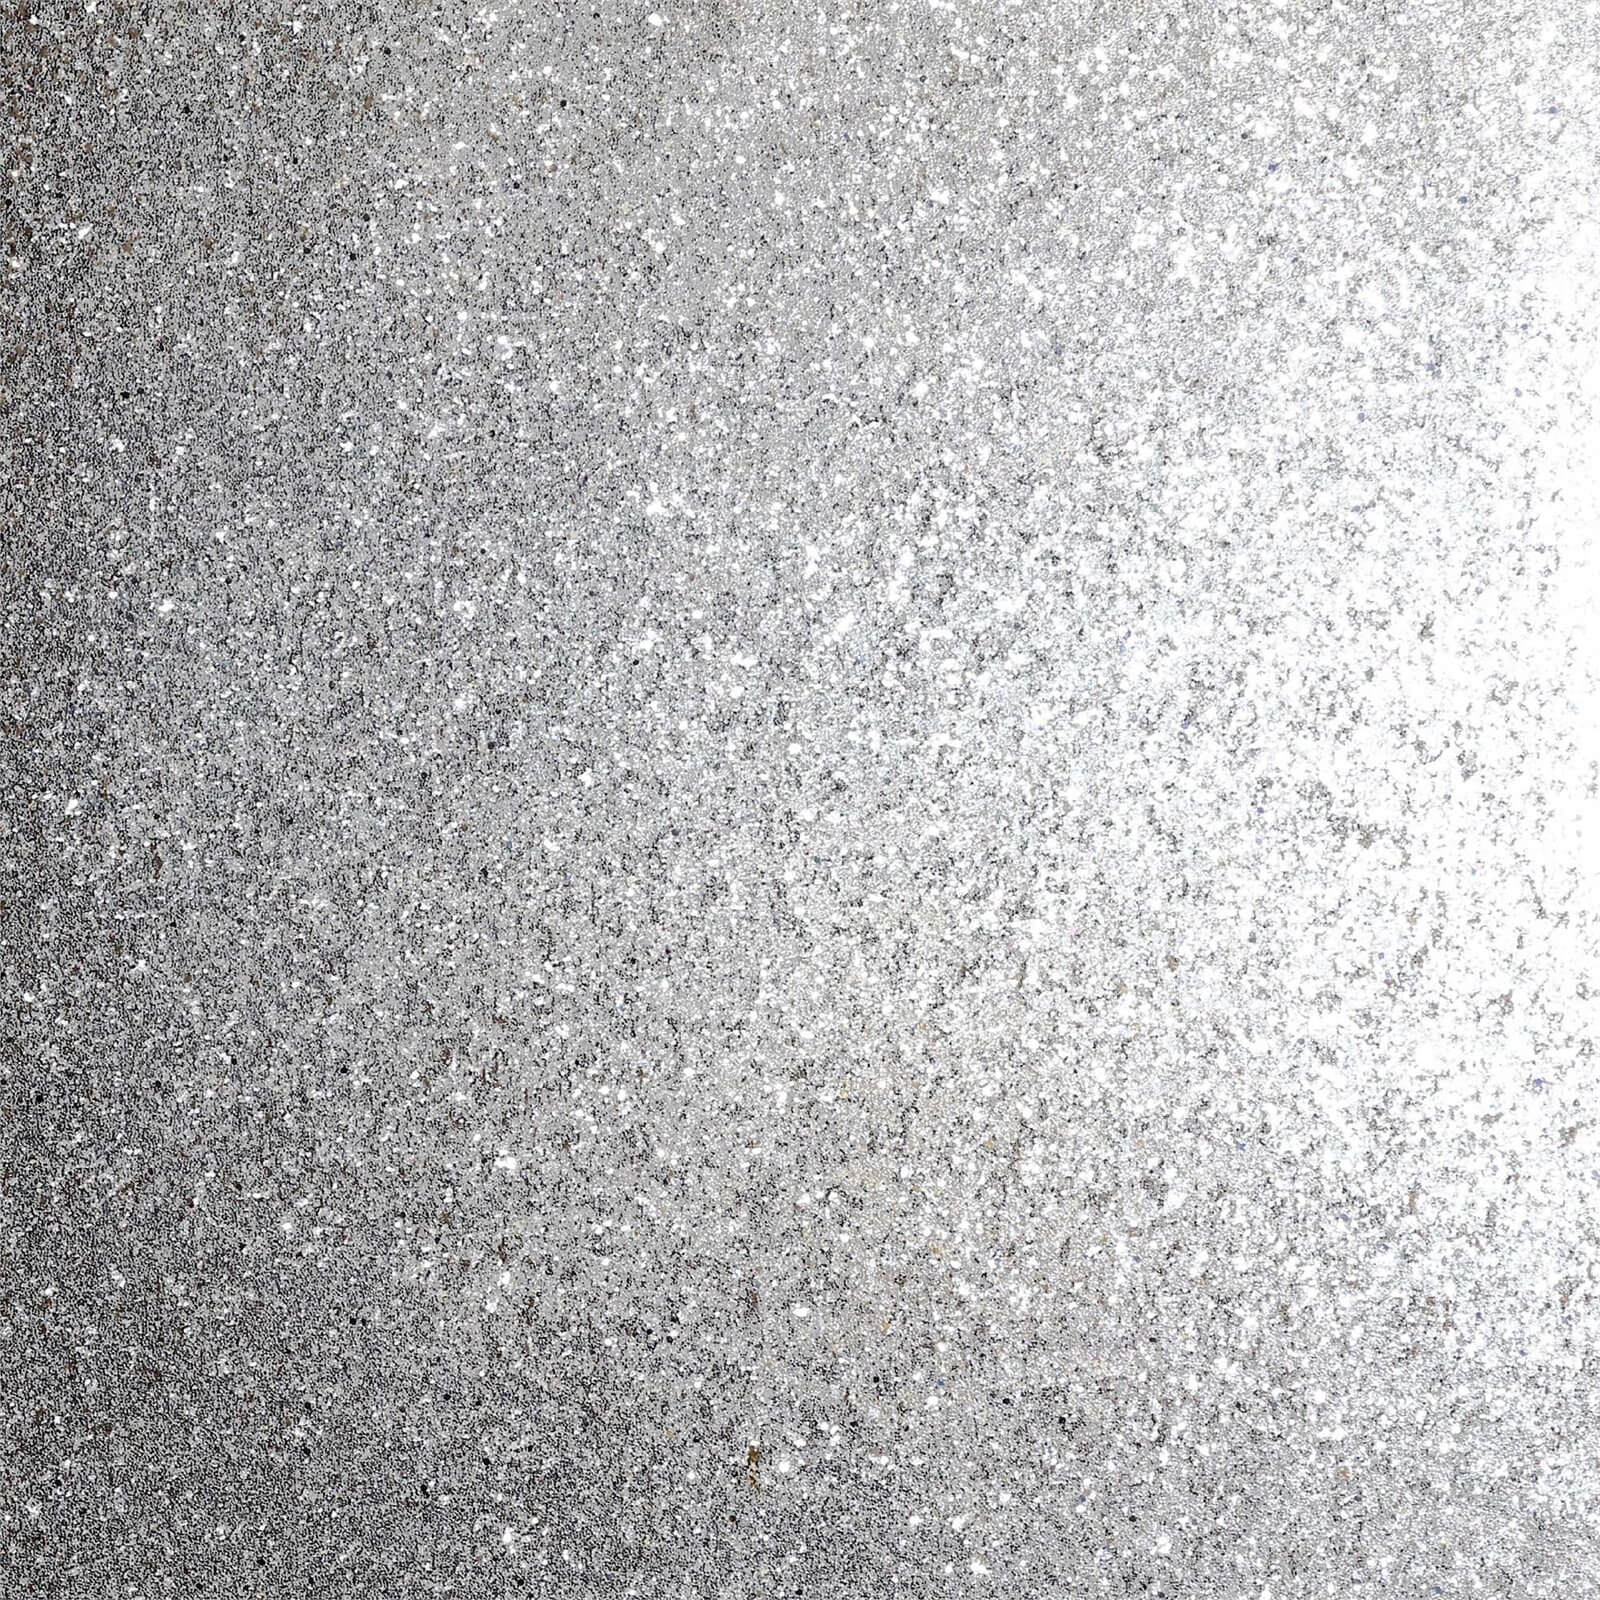 Arthouse Sequin Sparkle Silver Wallpaper